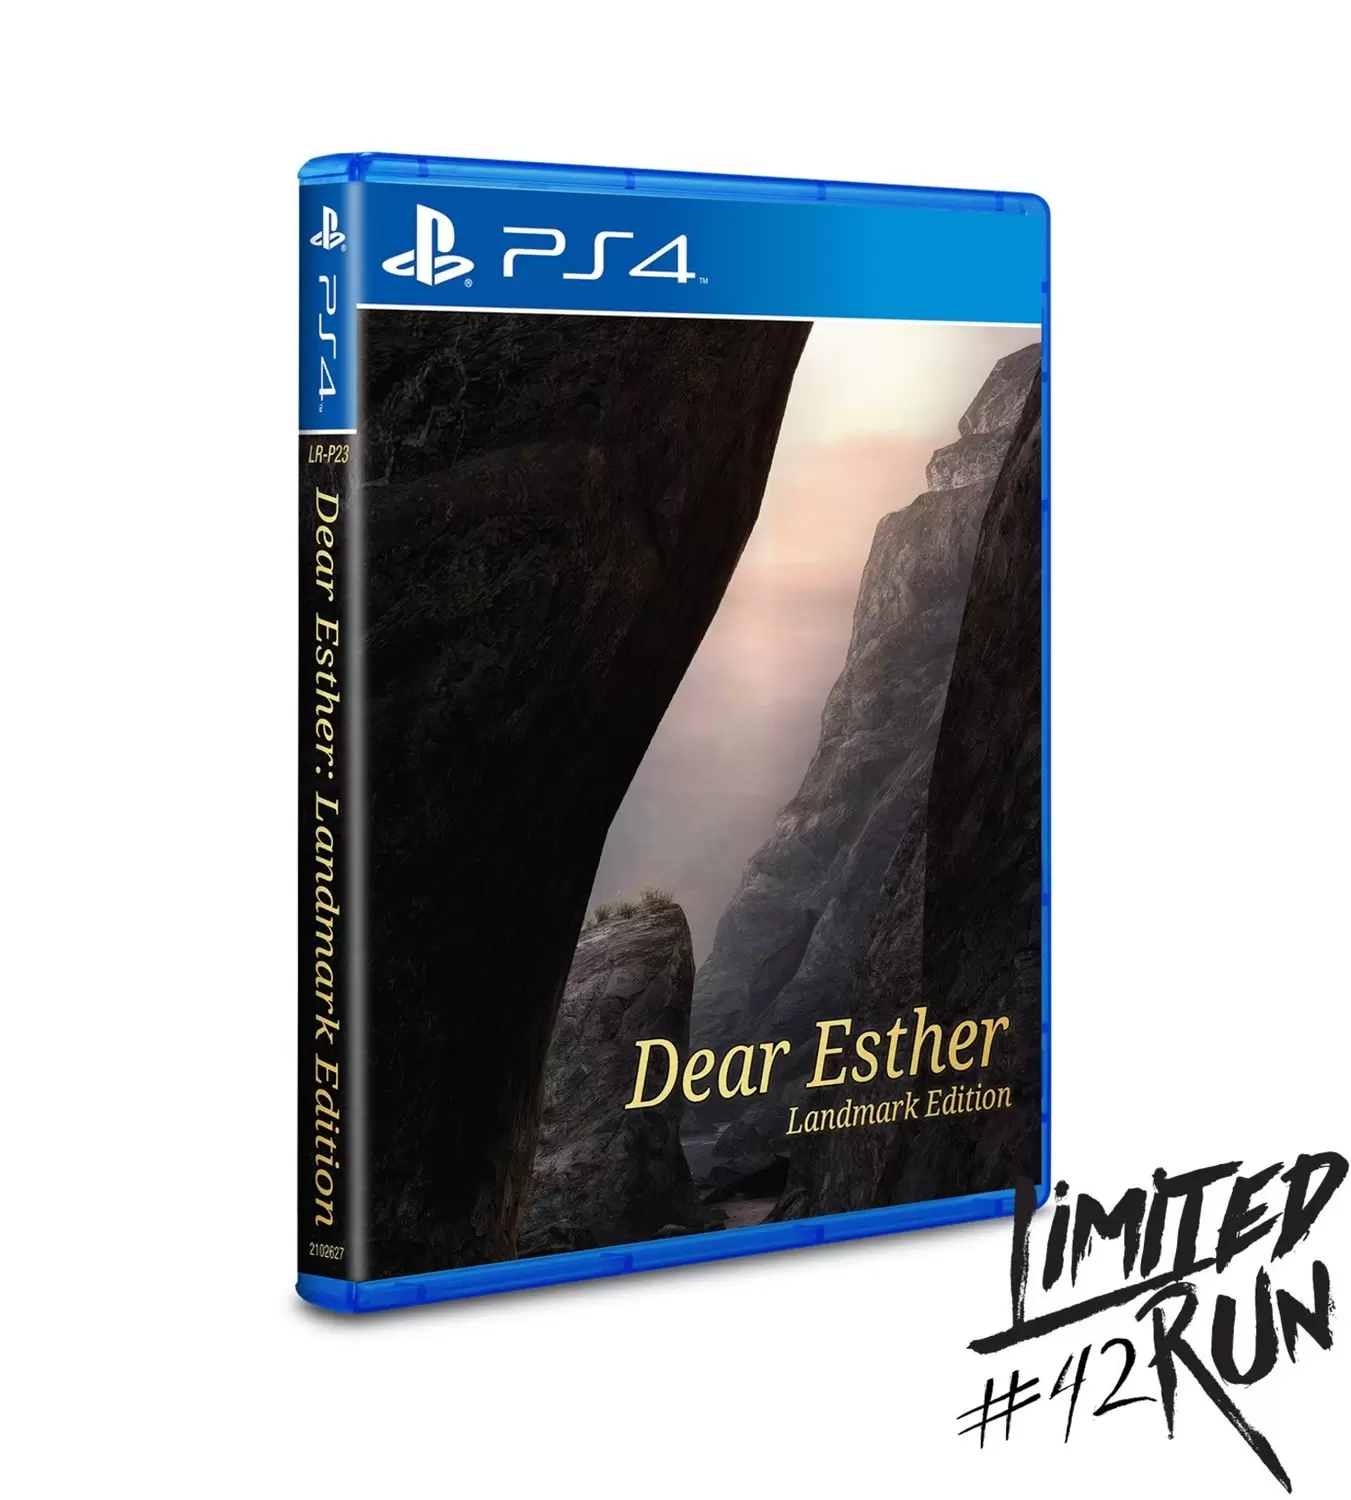 PS4 Games - Dear Esther - Landmark Edition